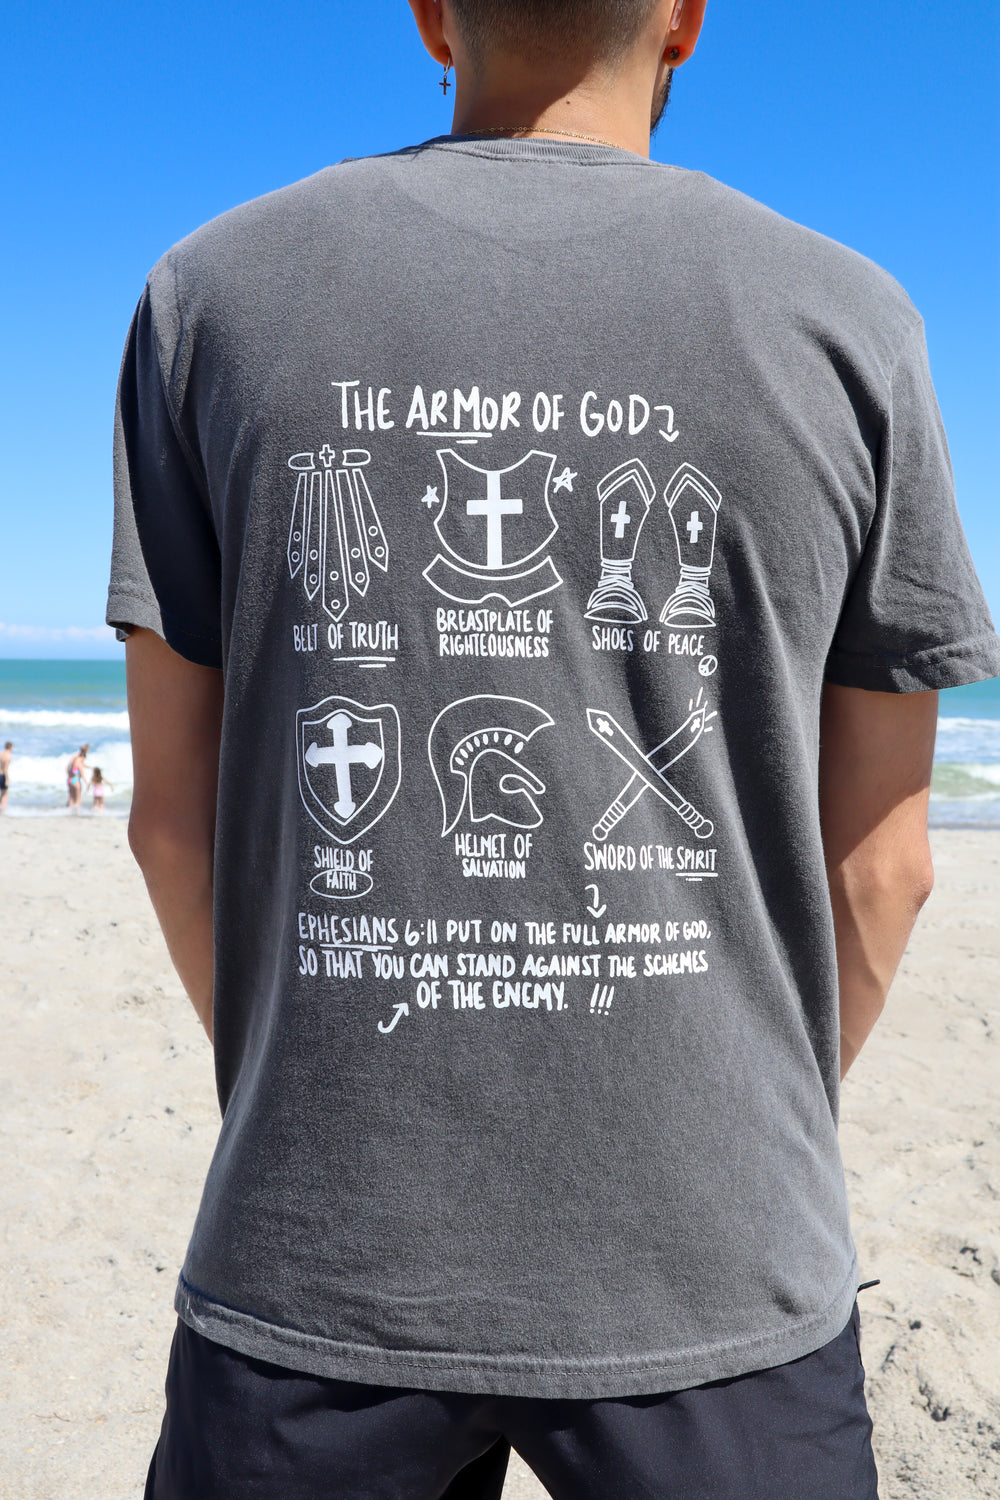 Armor of God T-Shirt